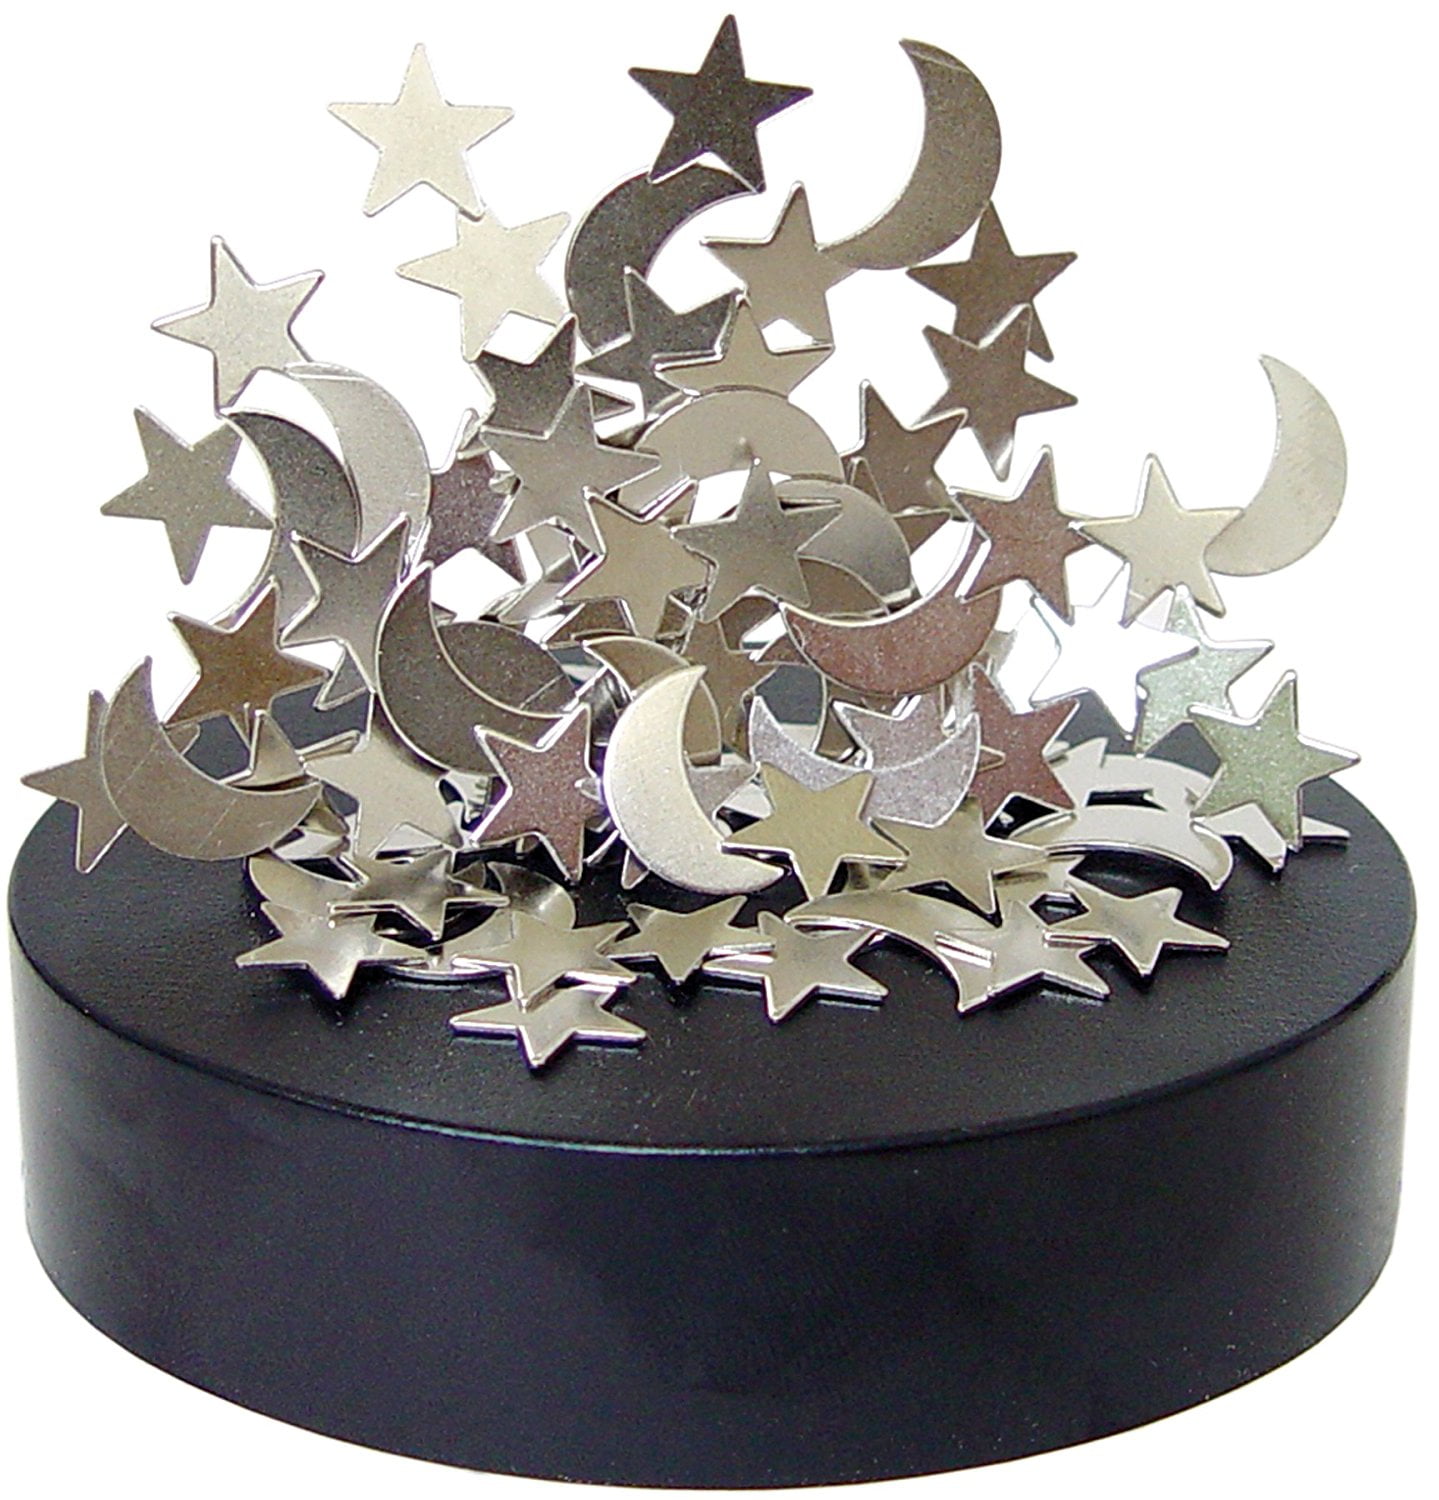 Magnetic Sculpture Desk Toy 